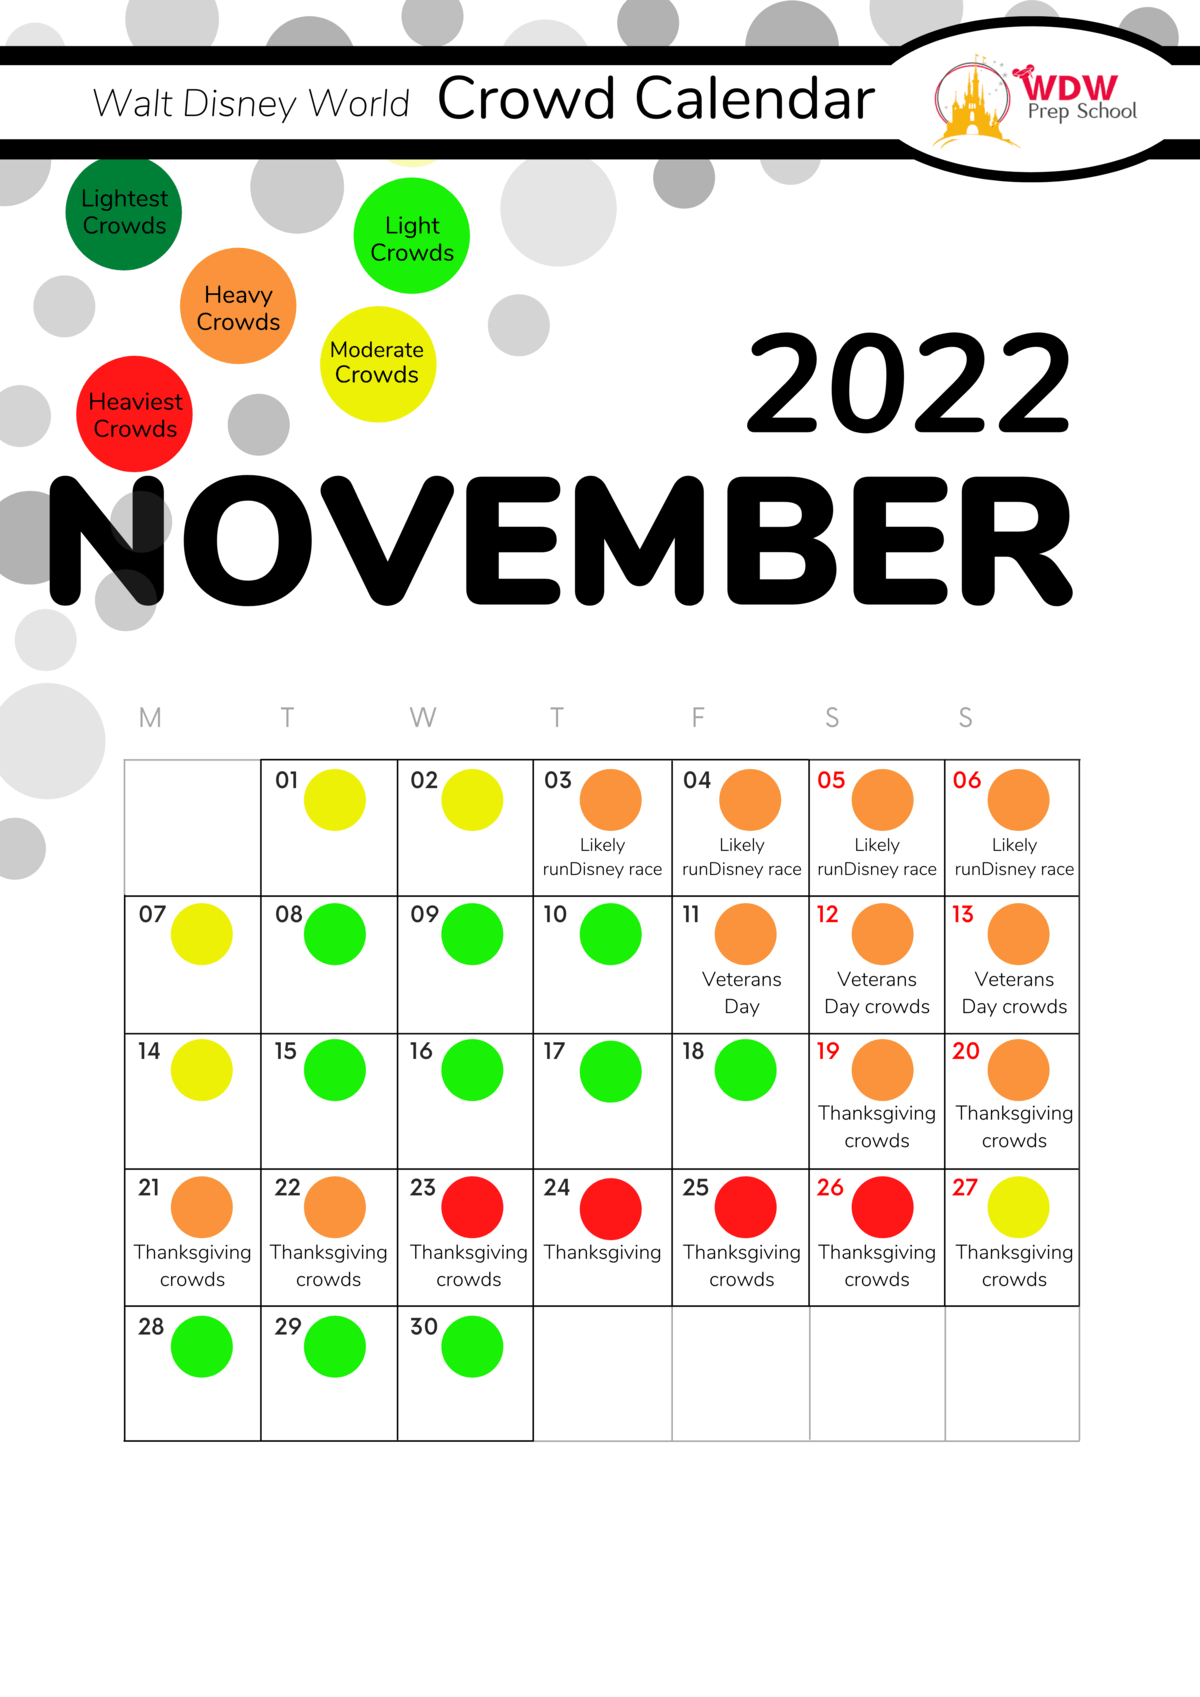 Disney Crowd Calendar 2022 In Excel